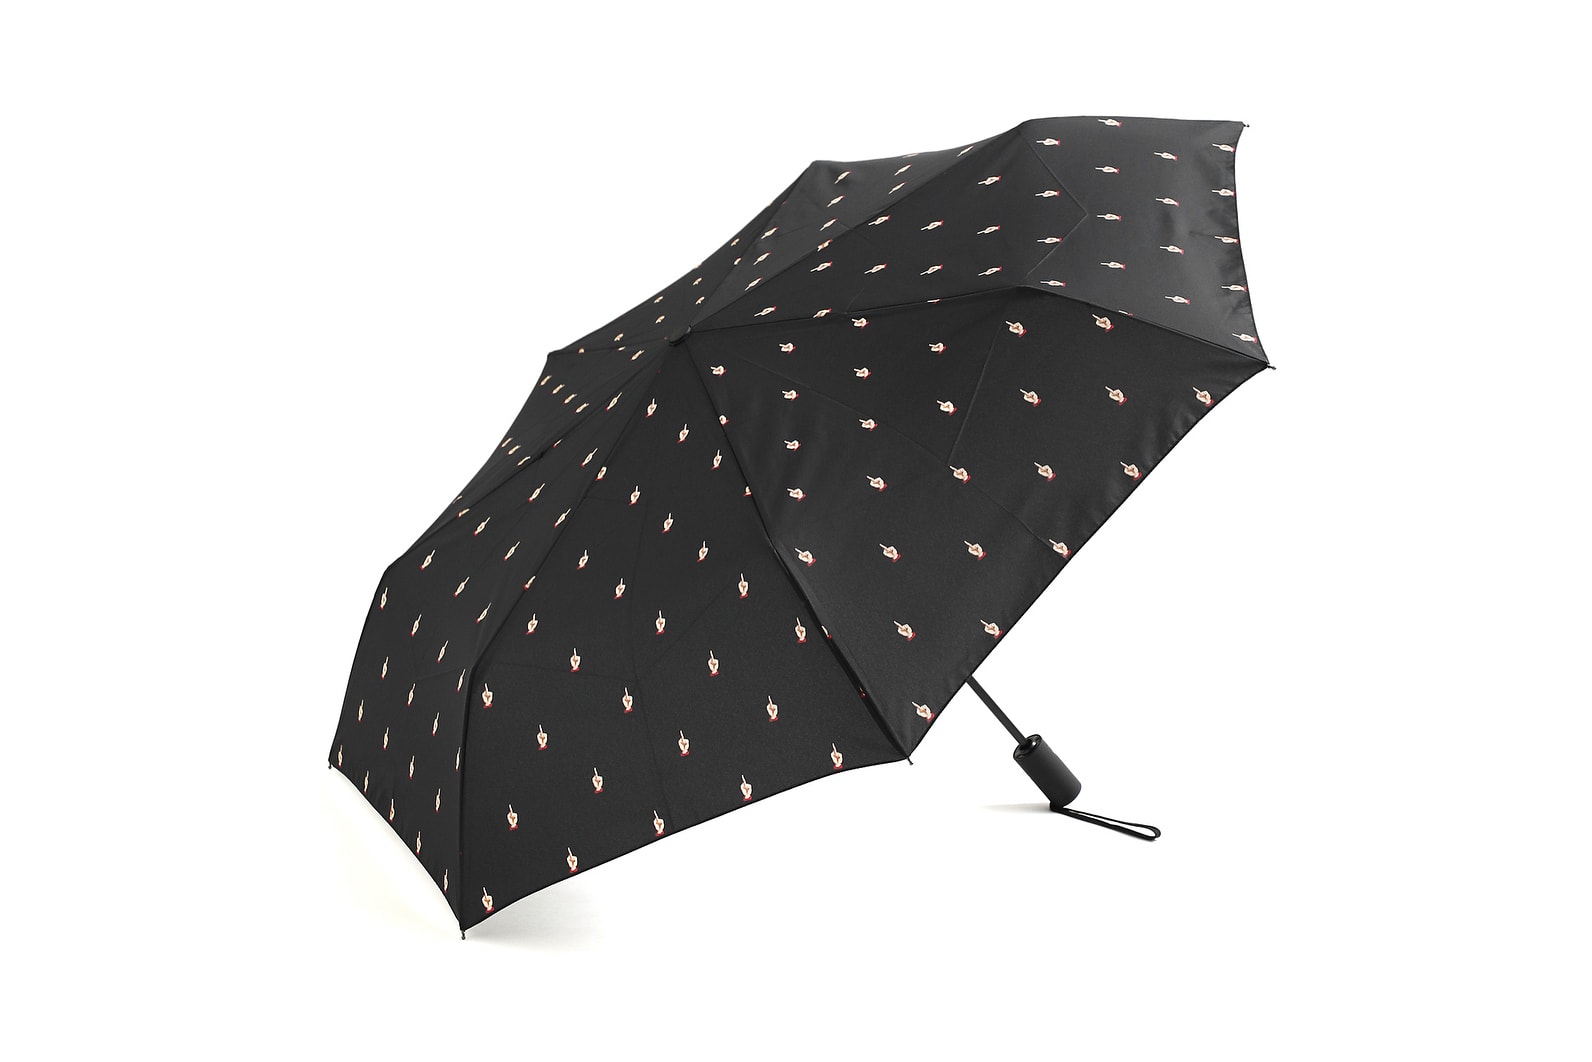 undercover kiu collaboration july 21 2018 printed umbrellas black white middle finger graphic zipper pocket